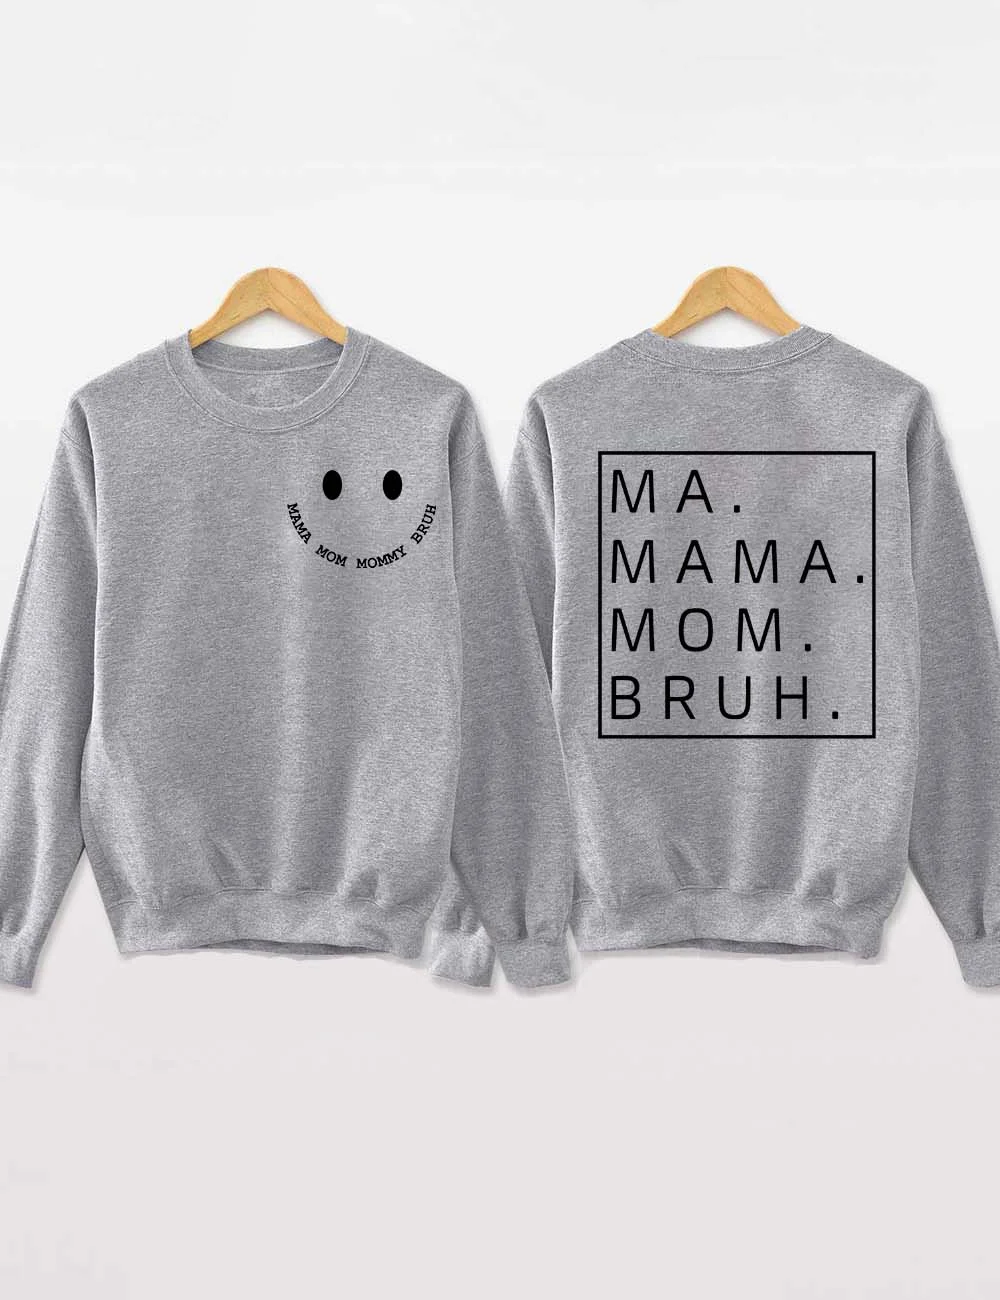 Mama Mommy Mom Bruh Sweatshirt